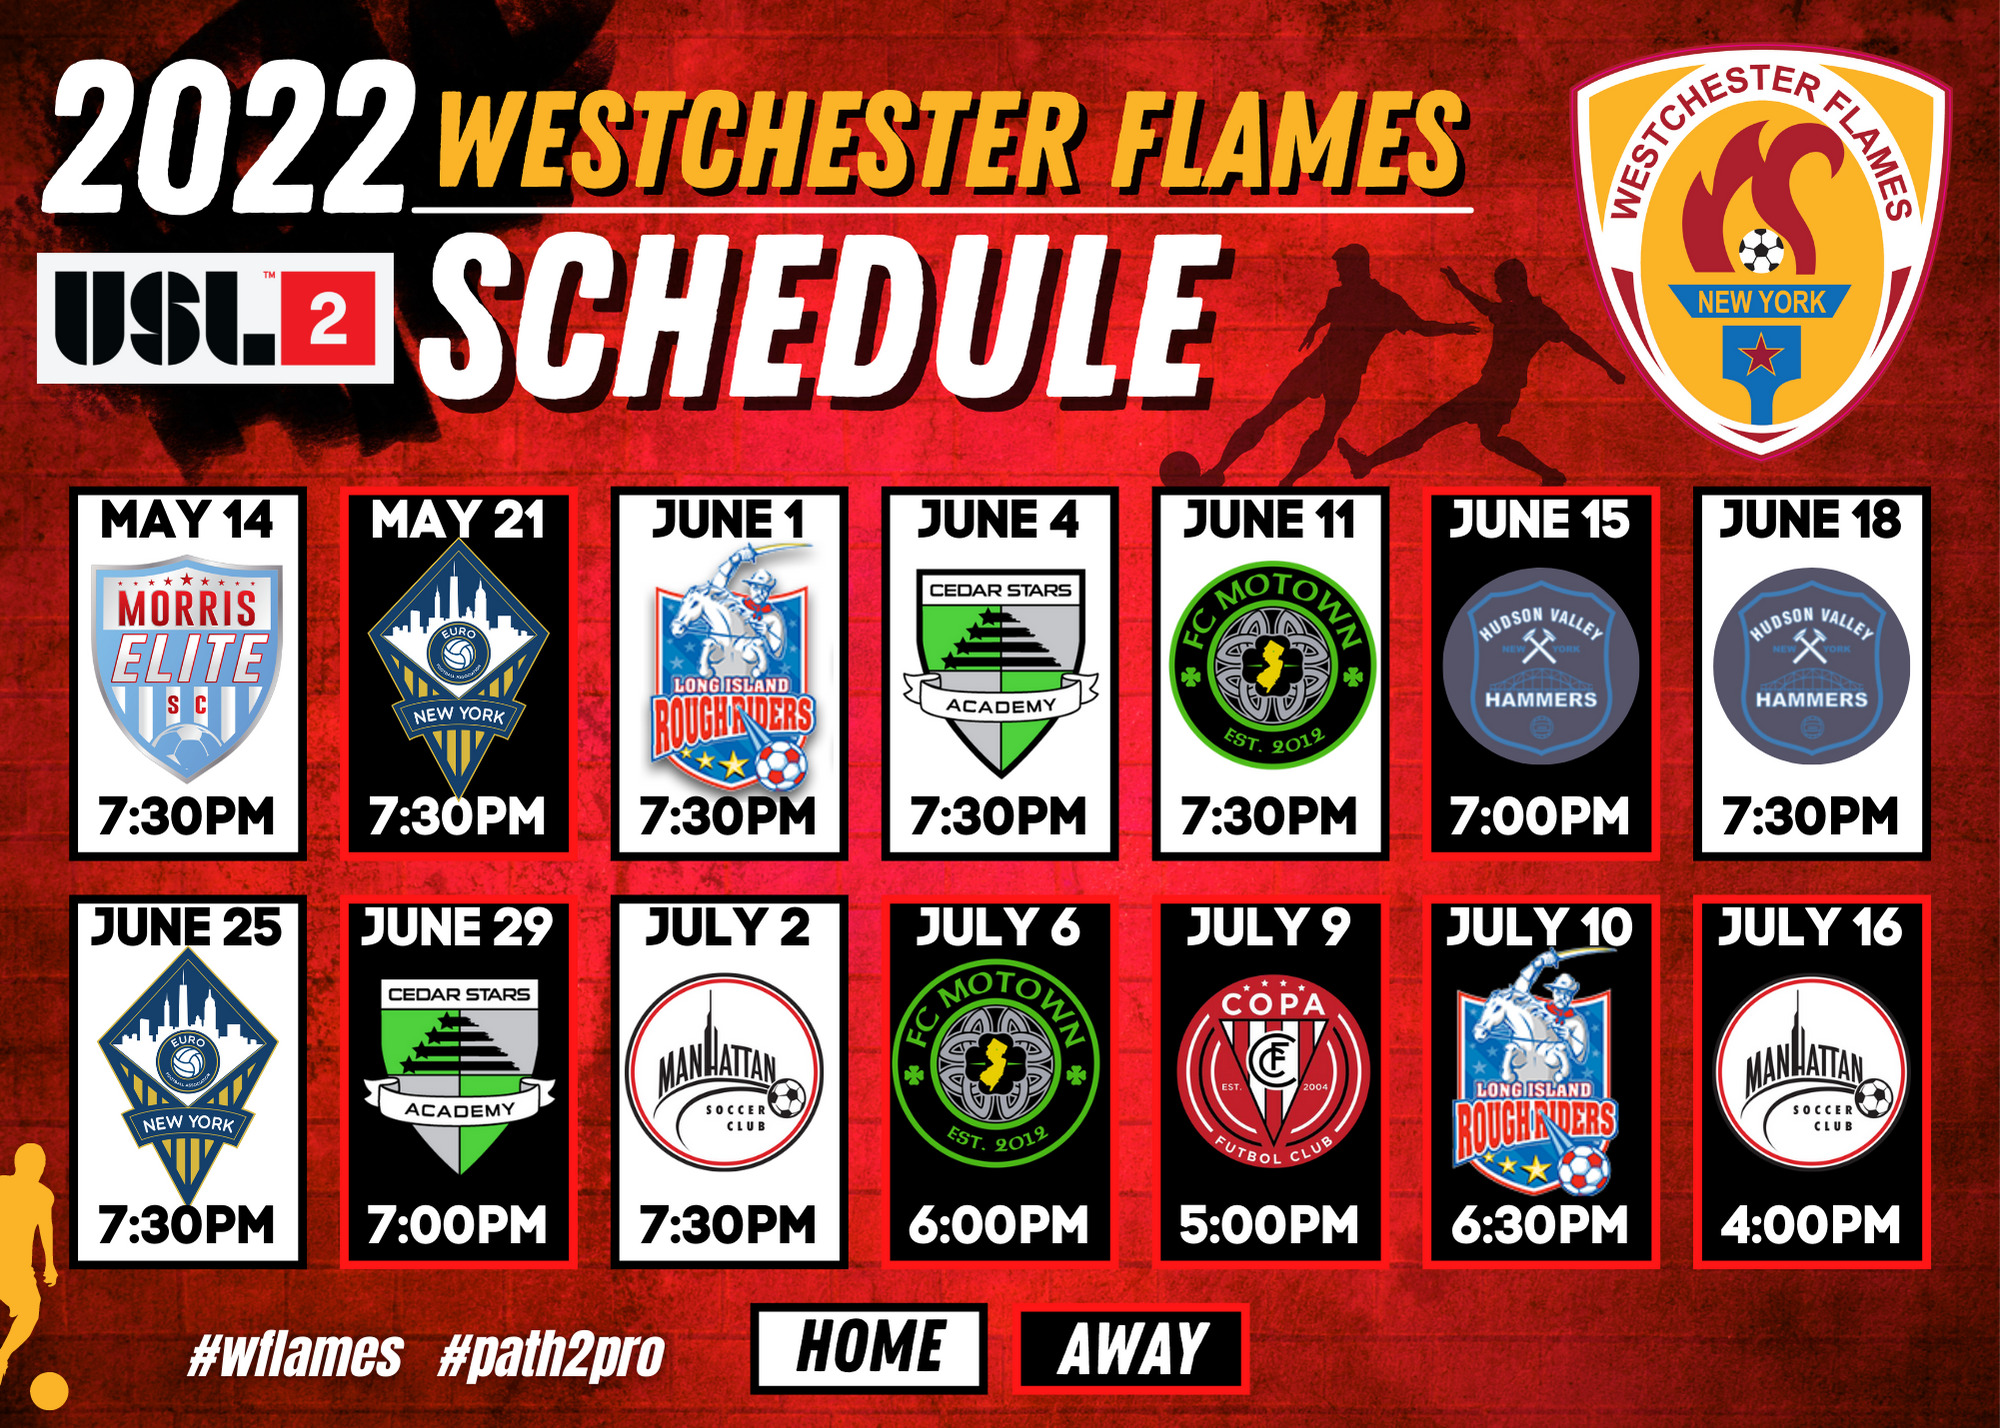 USL2 Schedule Westchester Flames (1)